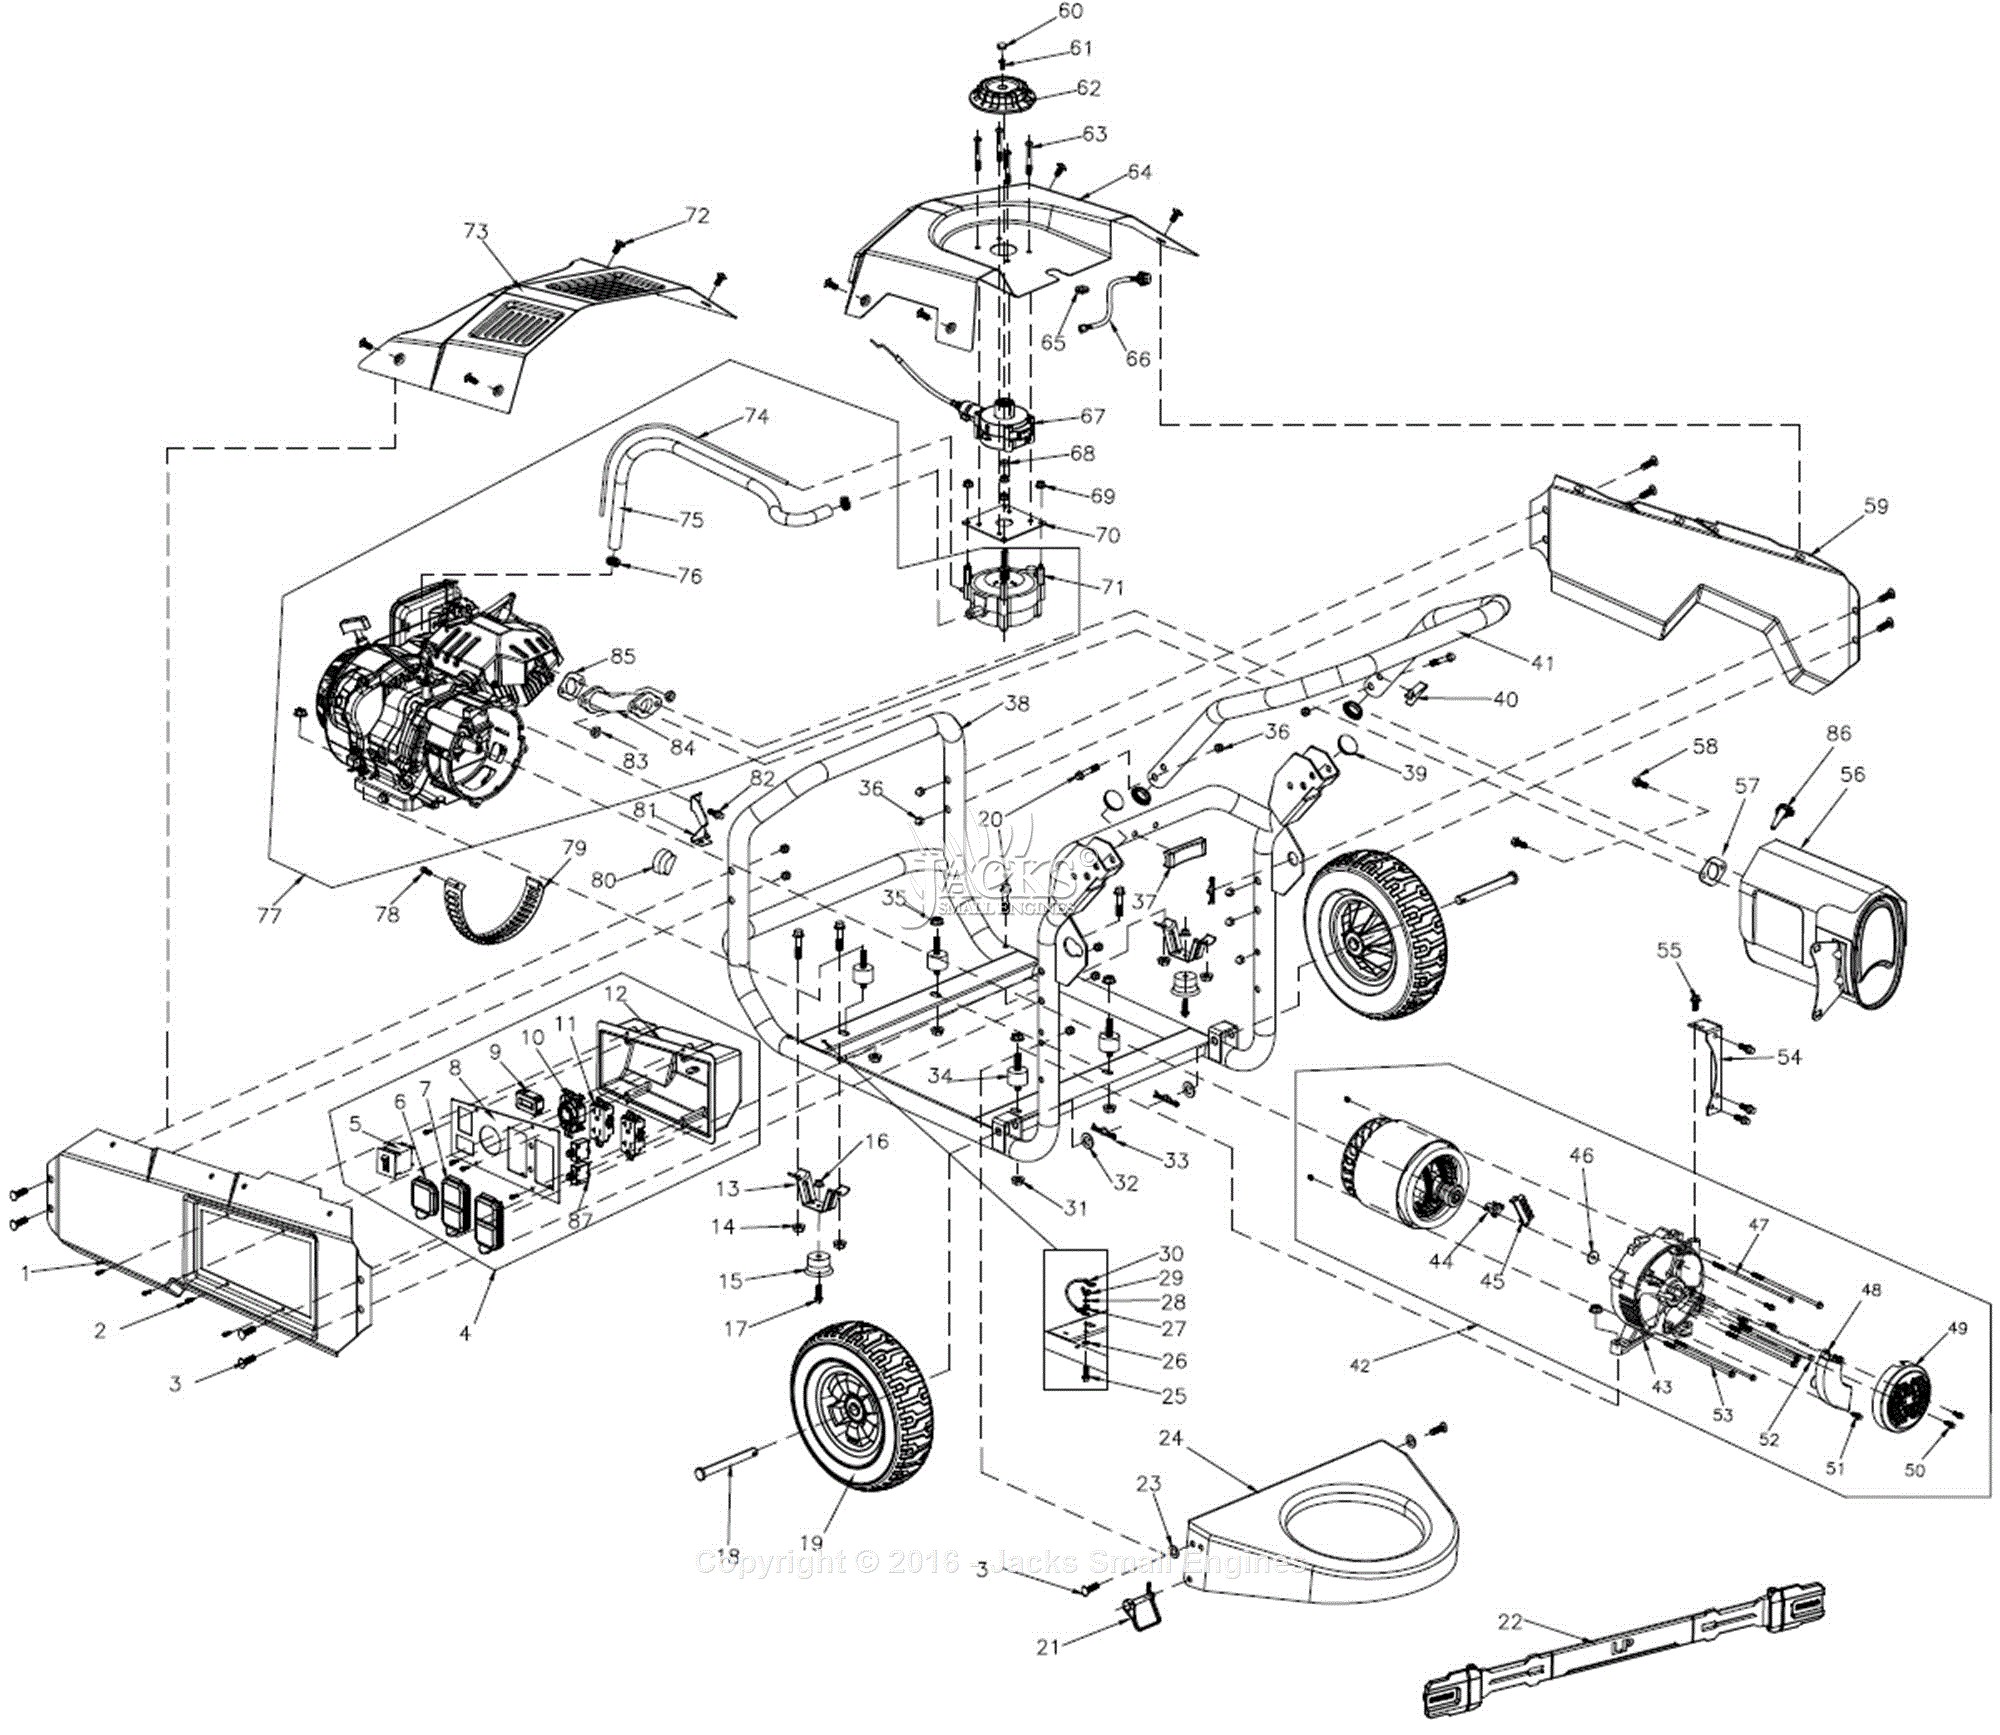 Auto Engine Parts Diagram Generac Lp5500 Parts Diagram for Full assembly Of Auto Engine Parts Diagram